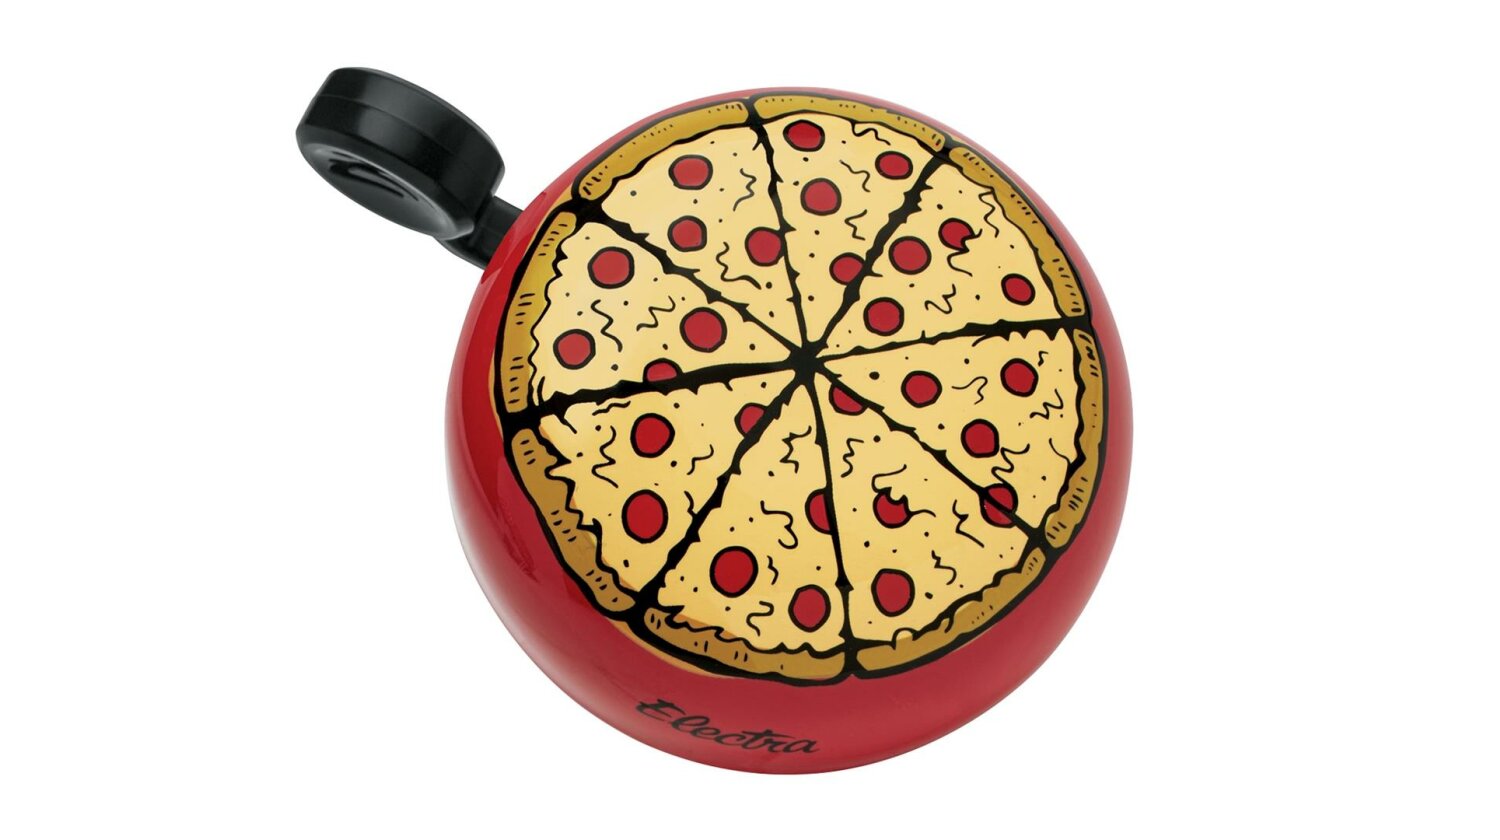 Electra Domed Pizza Fahrradklingel red